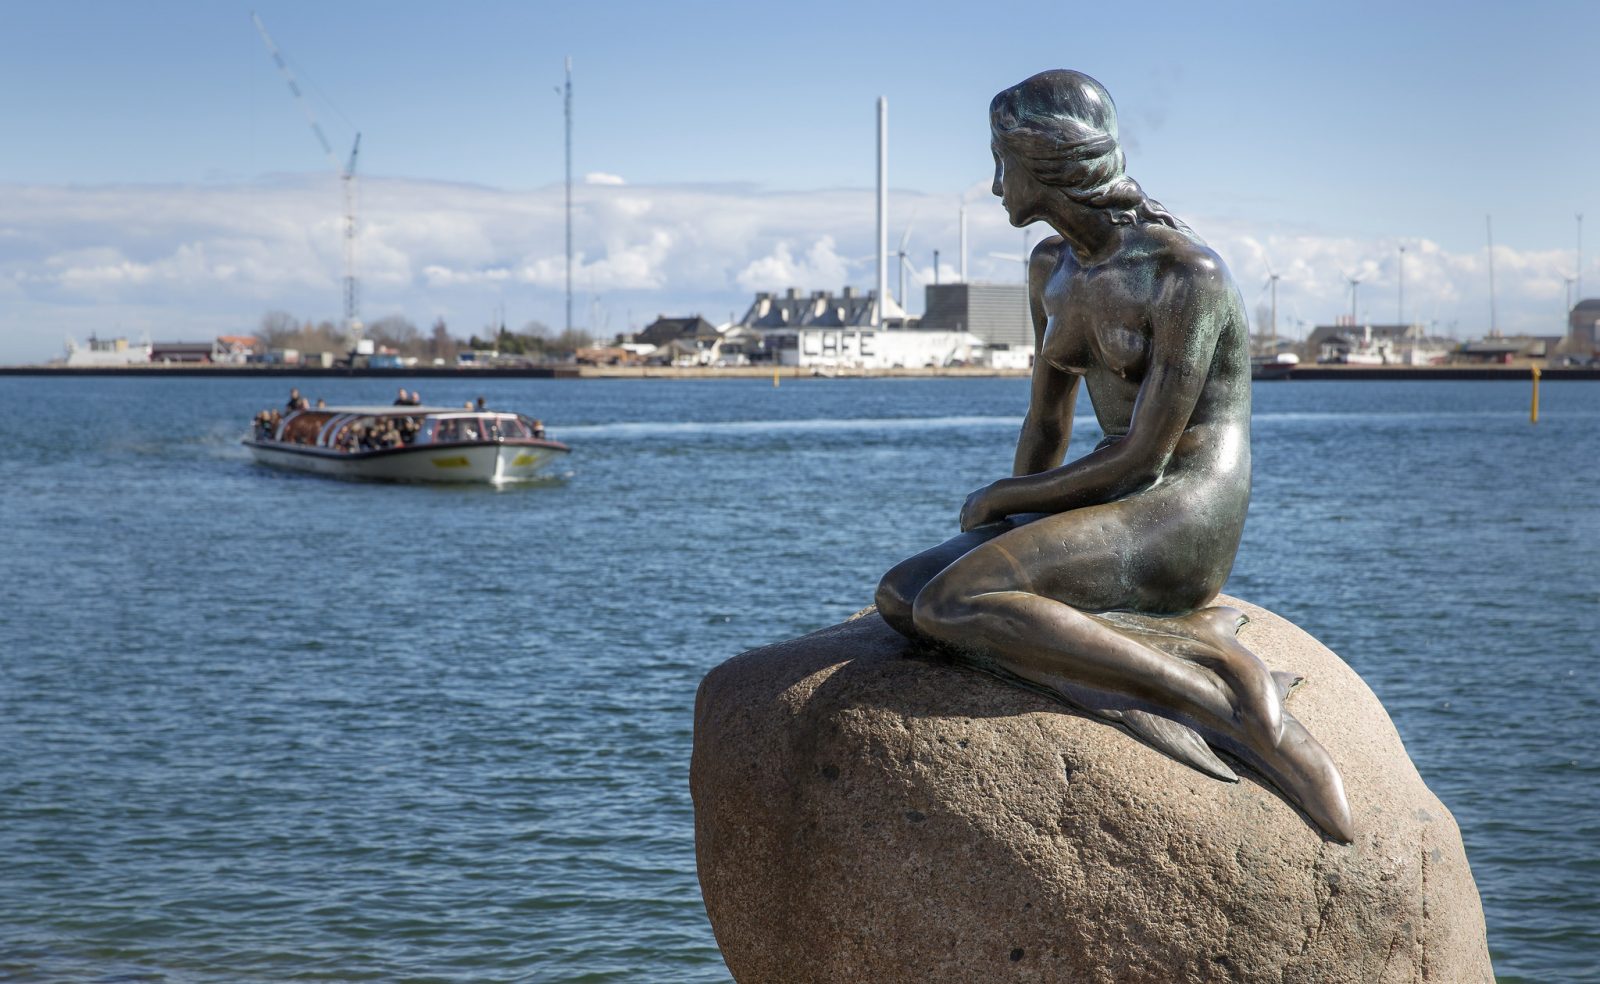 Mermaid Trivia Quiz The Little Mermaid Statue In Copenhagen, Denmark